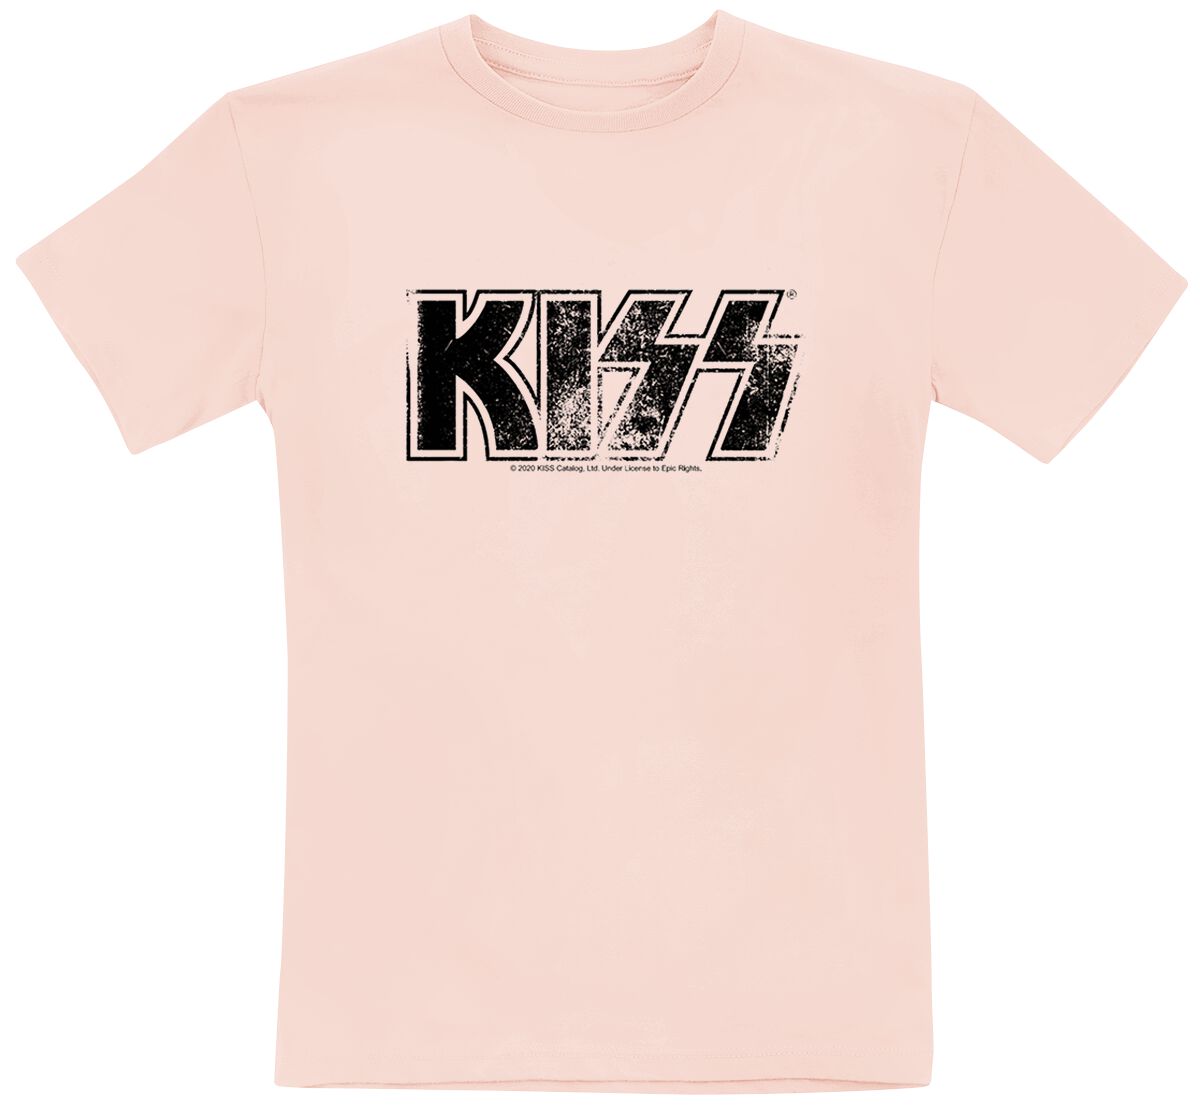 T-shirt de Kiss - Metal-Kids - Distressed Logo - 164 - pour filles - rose clair